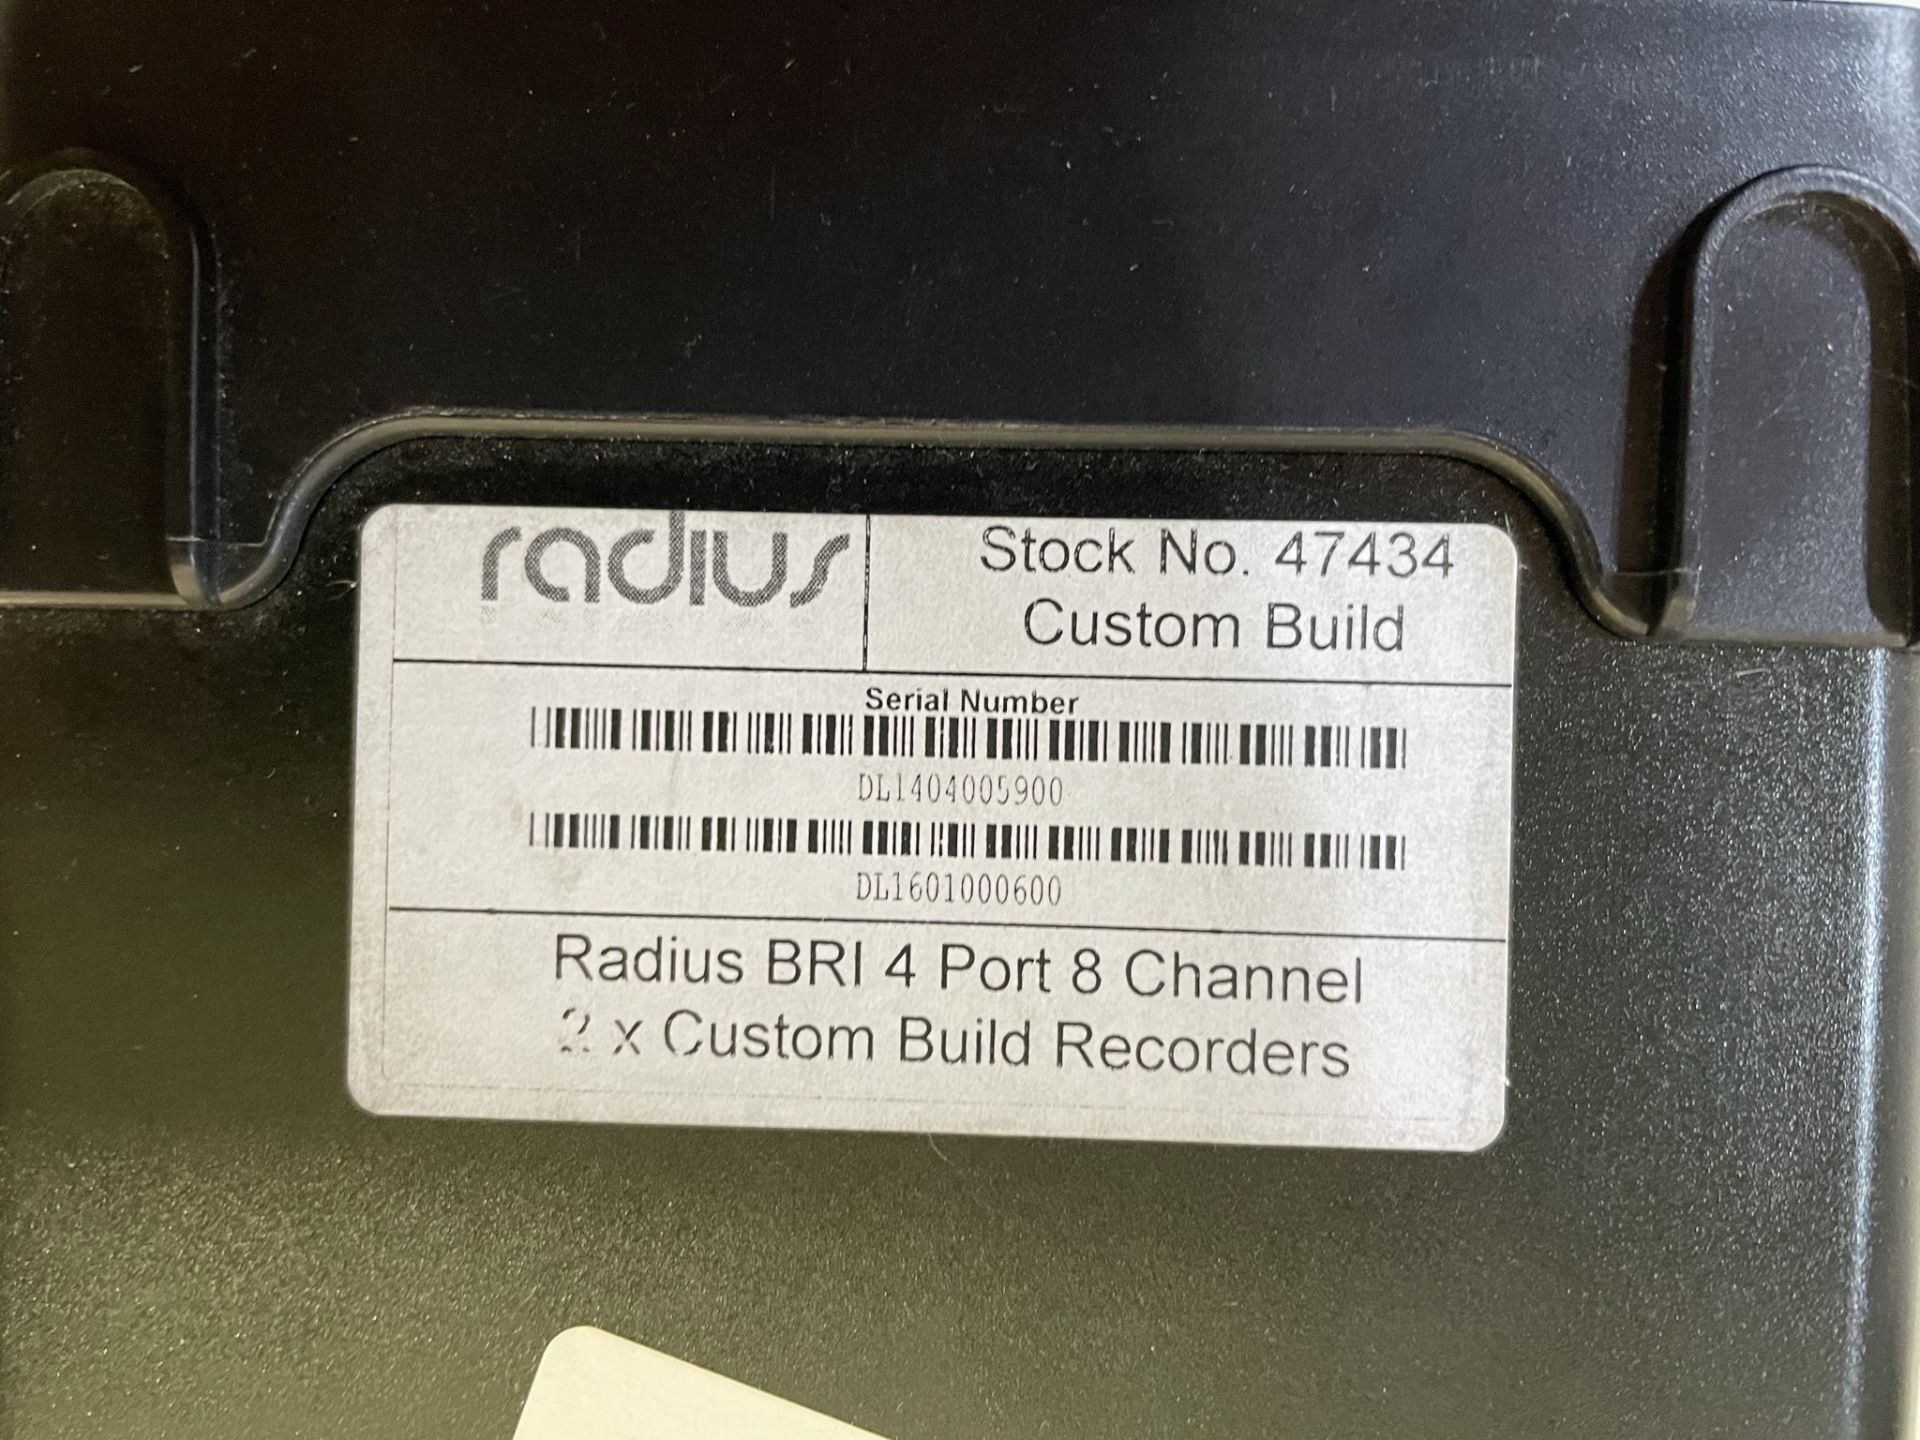 2 x Radius BRI 4 Port 8 Channel Digital Call Recorders - Image 5 of 5